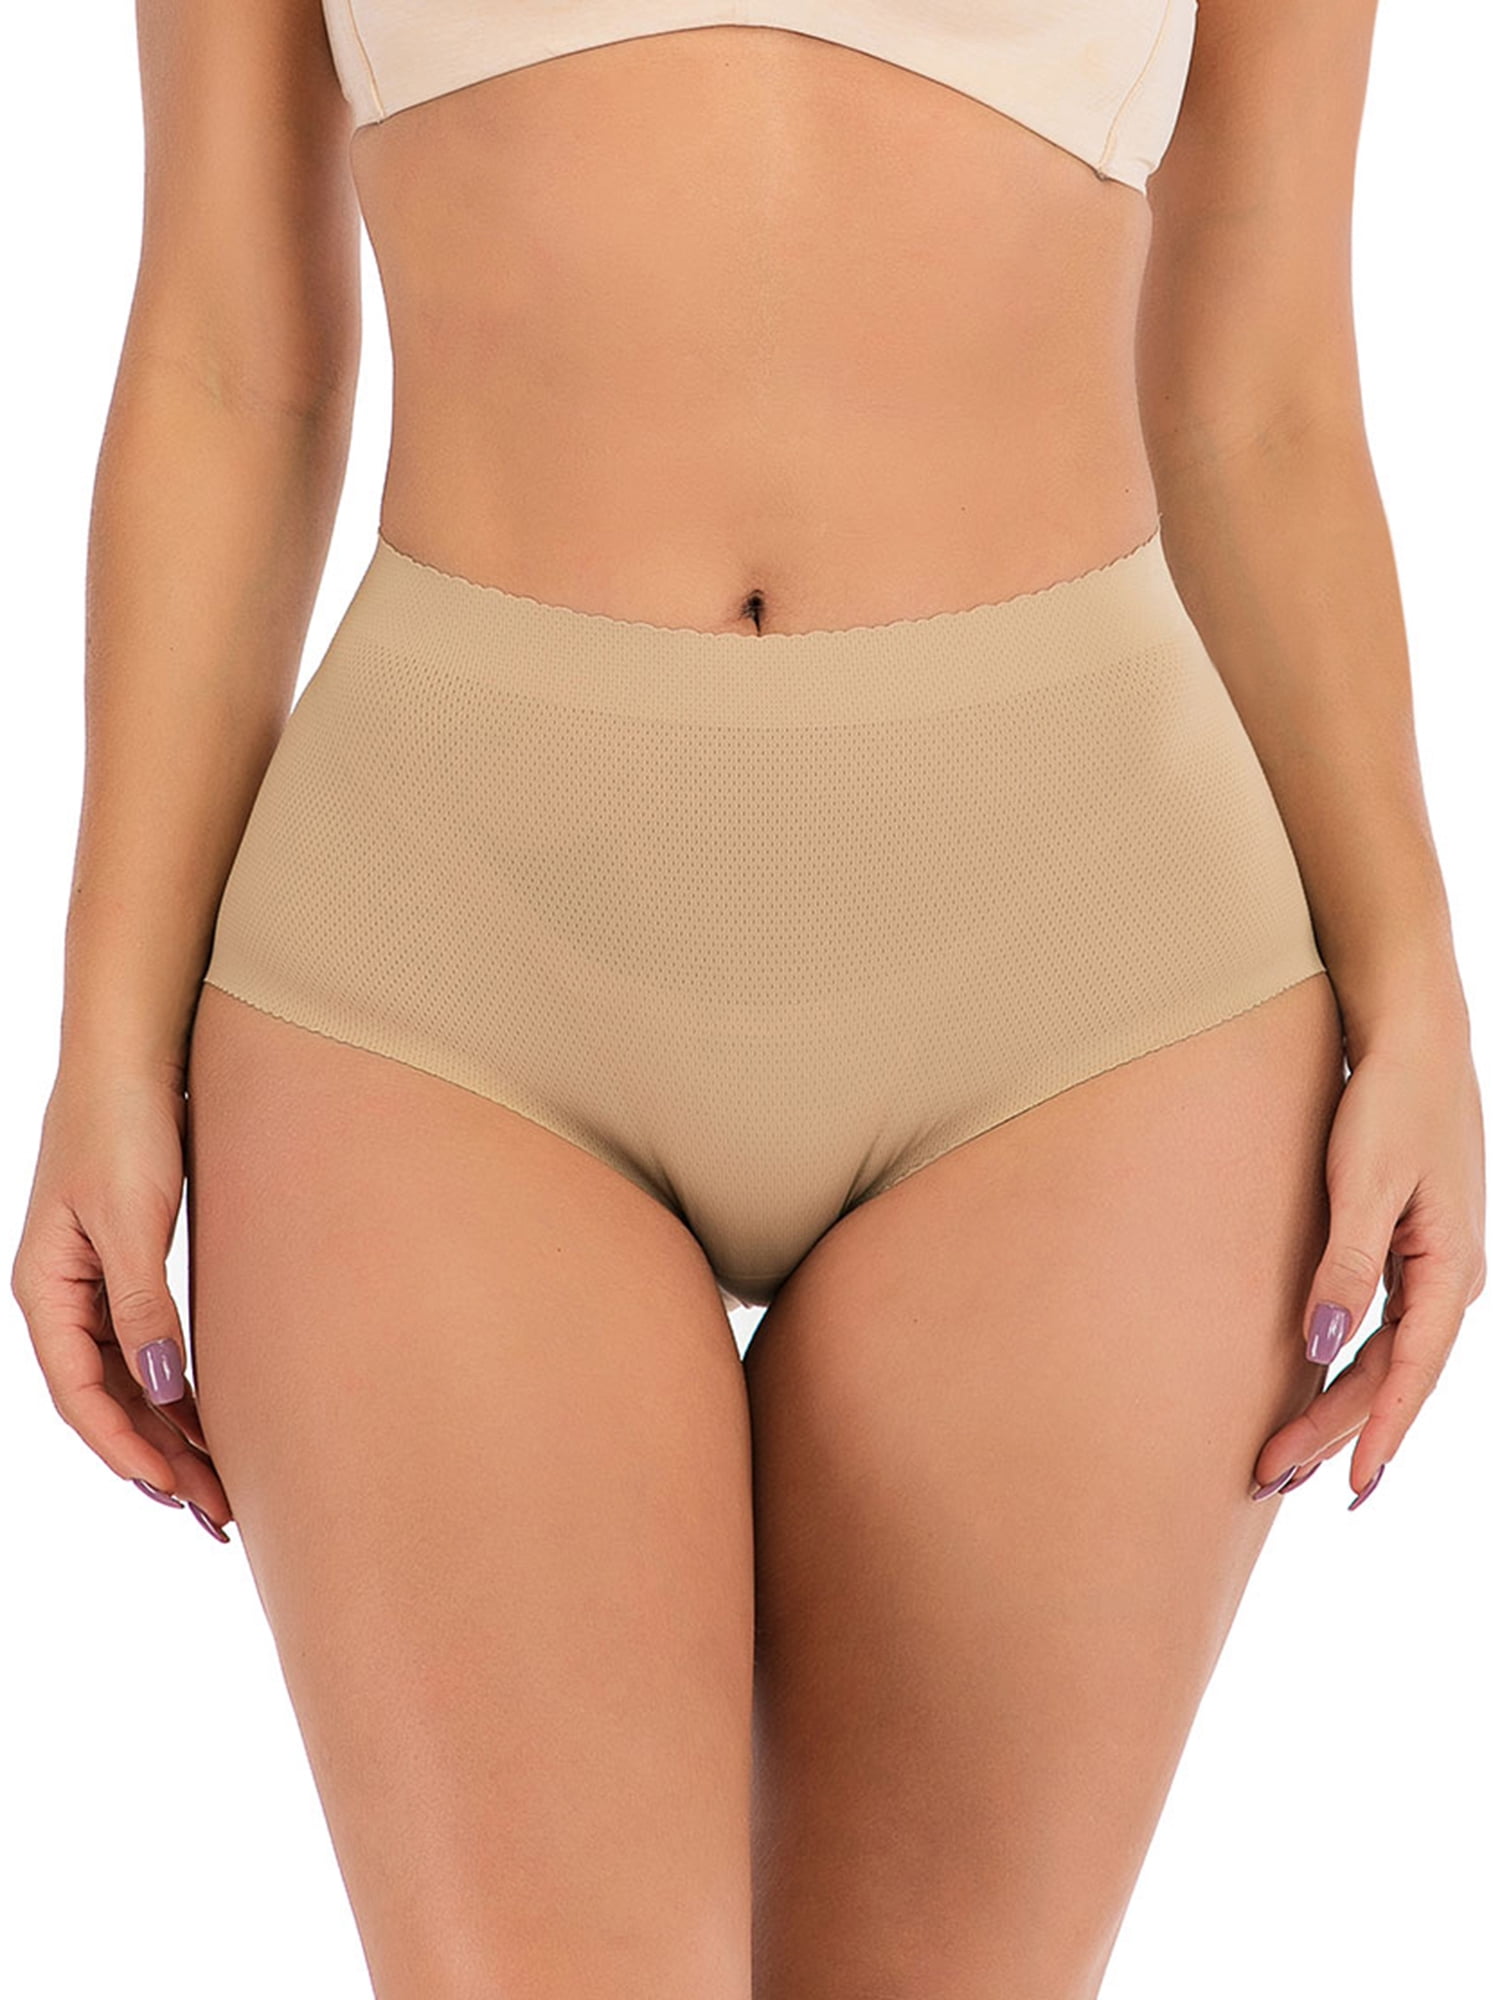 FUTATA Women Butt Lifter Padded Shapewear Hip Enhancer Panties Body Shaper  Brief Seamless Underwear 